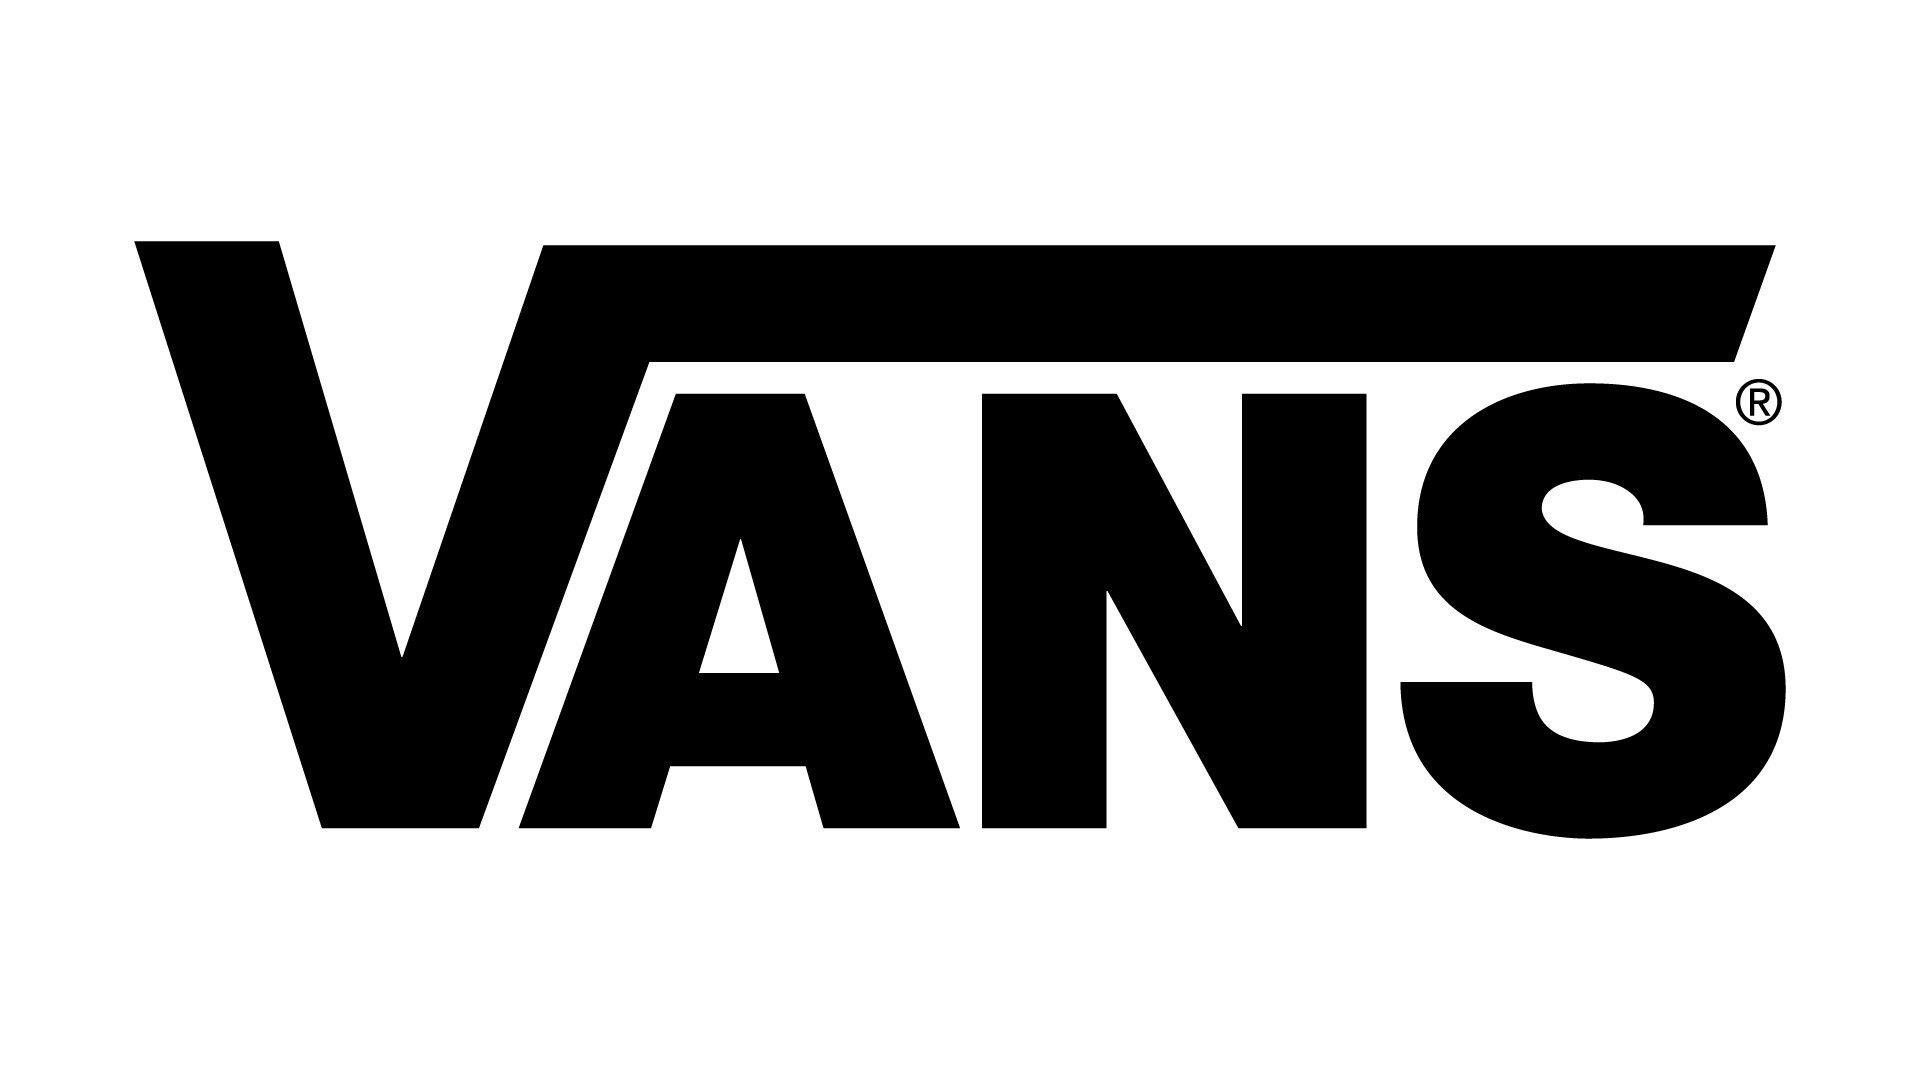 Cool Vans Logo - cool vans logo wallpaper hd | Tumblr | Pinterest | Vans logo, Vans ...